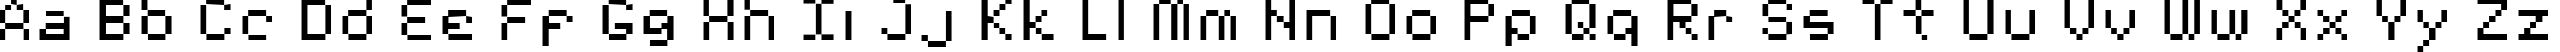 Пример написания английского алфавита шрифтом 00 Starmap Truetype